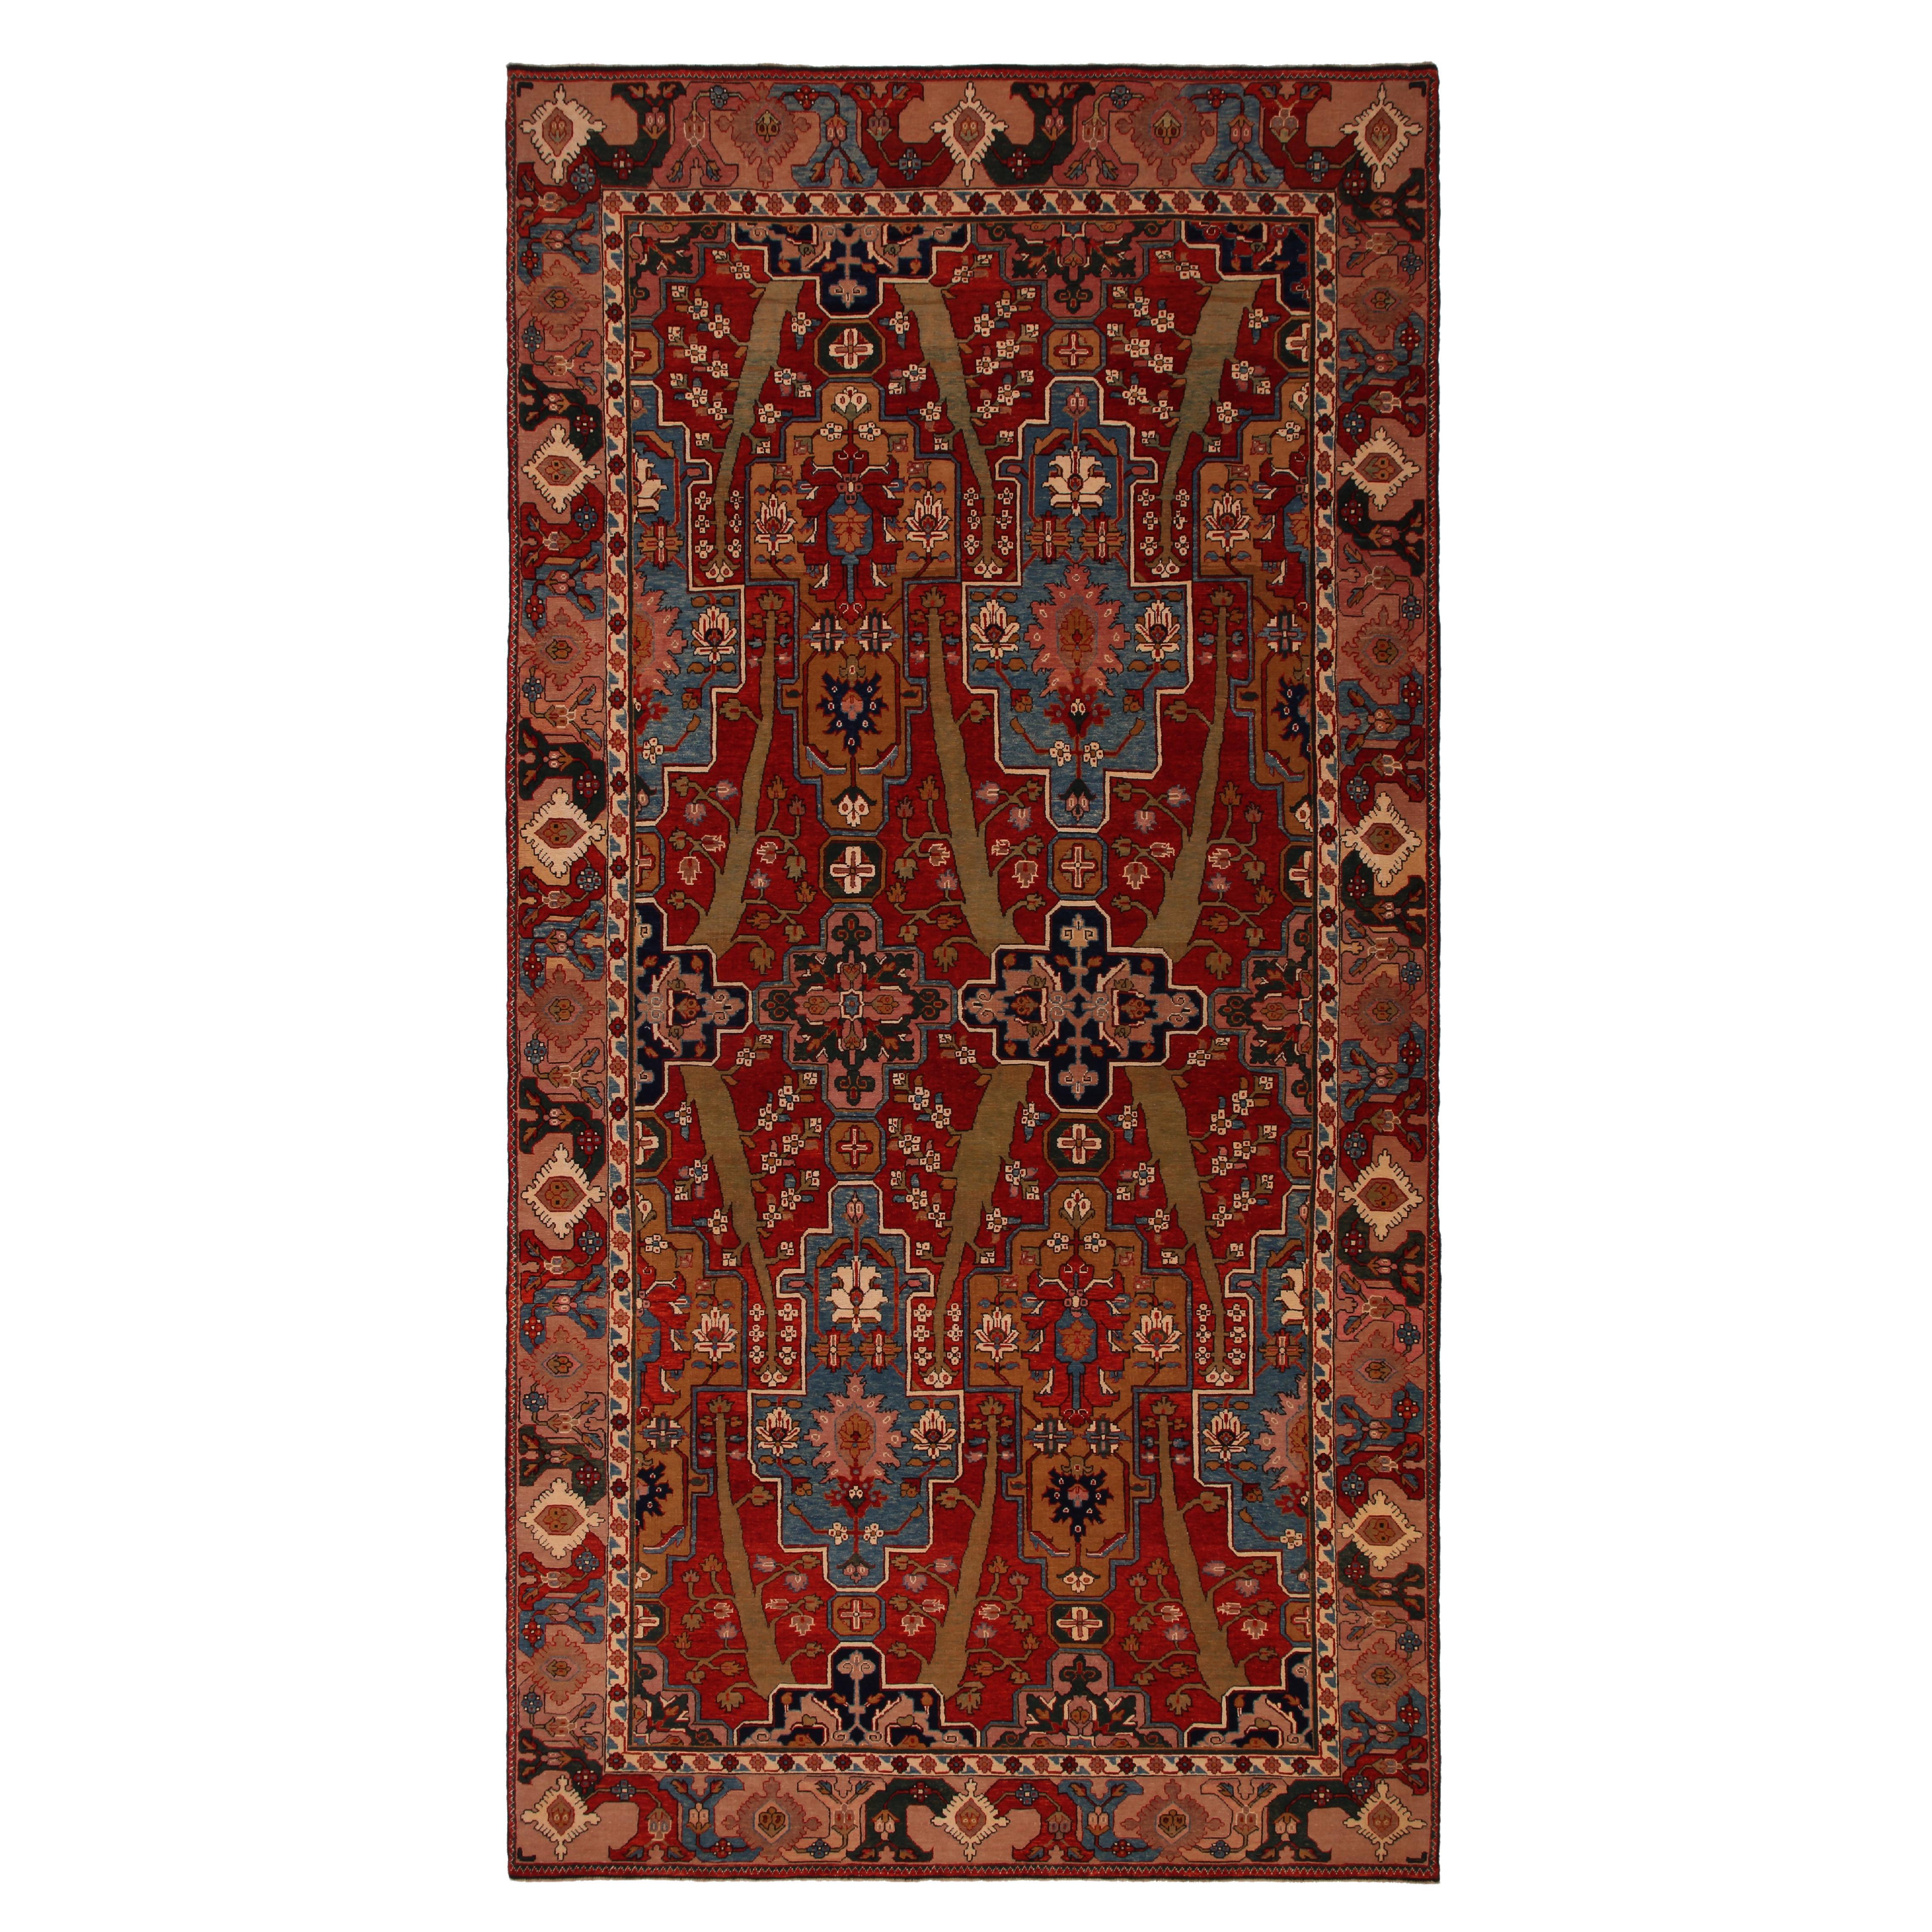 Ararat Rugs the Barbieri Tree Design Carpet, Persian Revival Rug, Natural Dyed For Sale